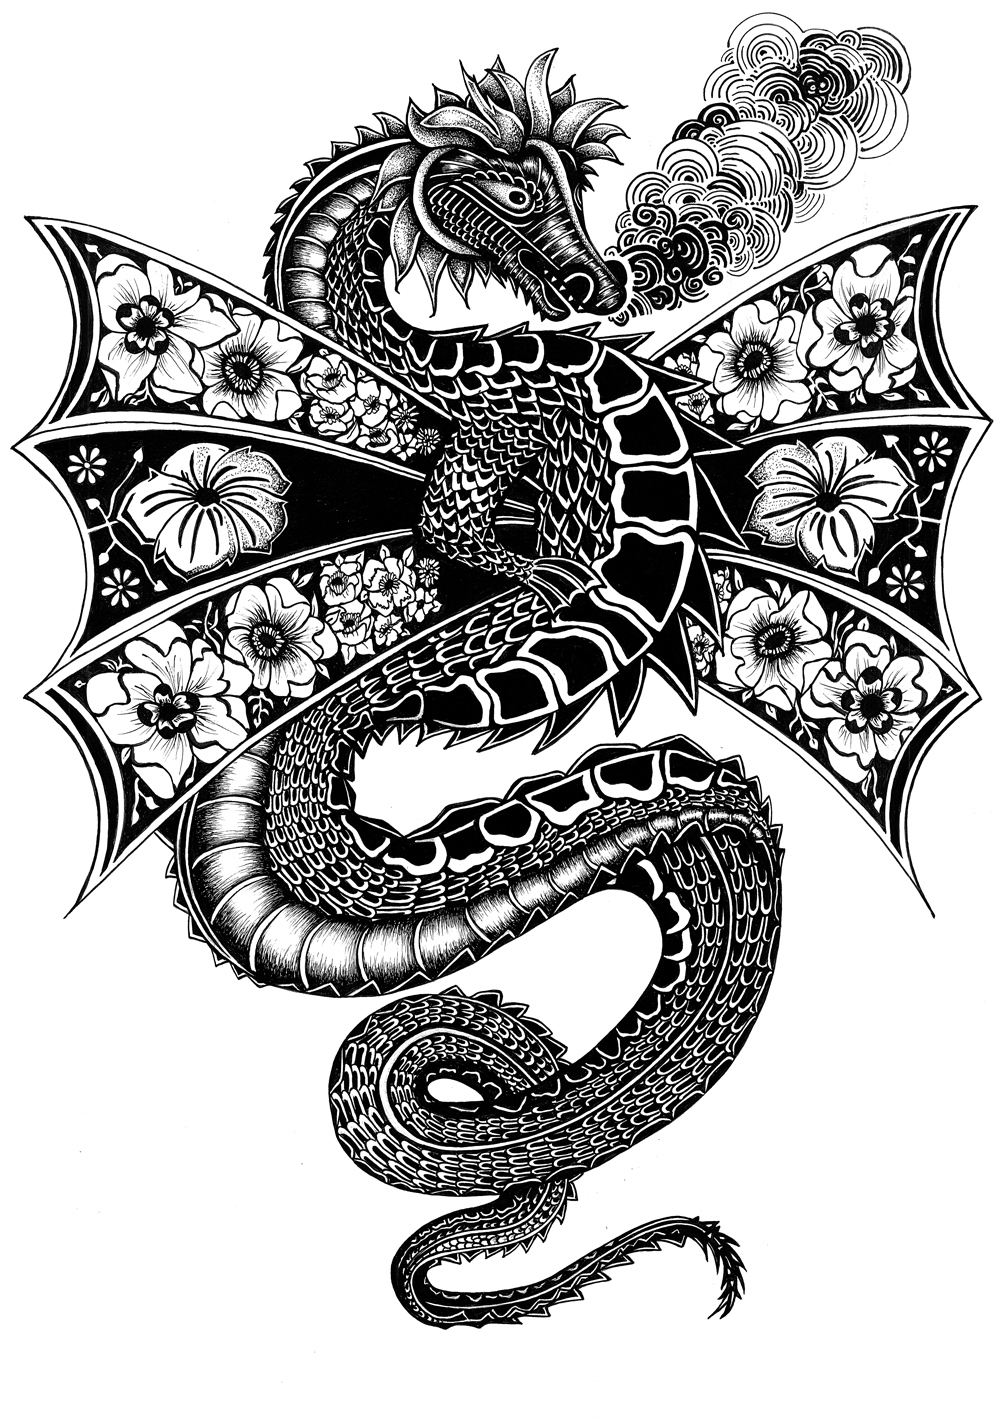 dragon ink blackink handdrawing floral detailart tshirt pattern Fashion  dragonart